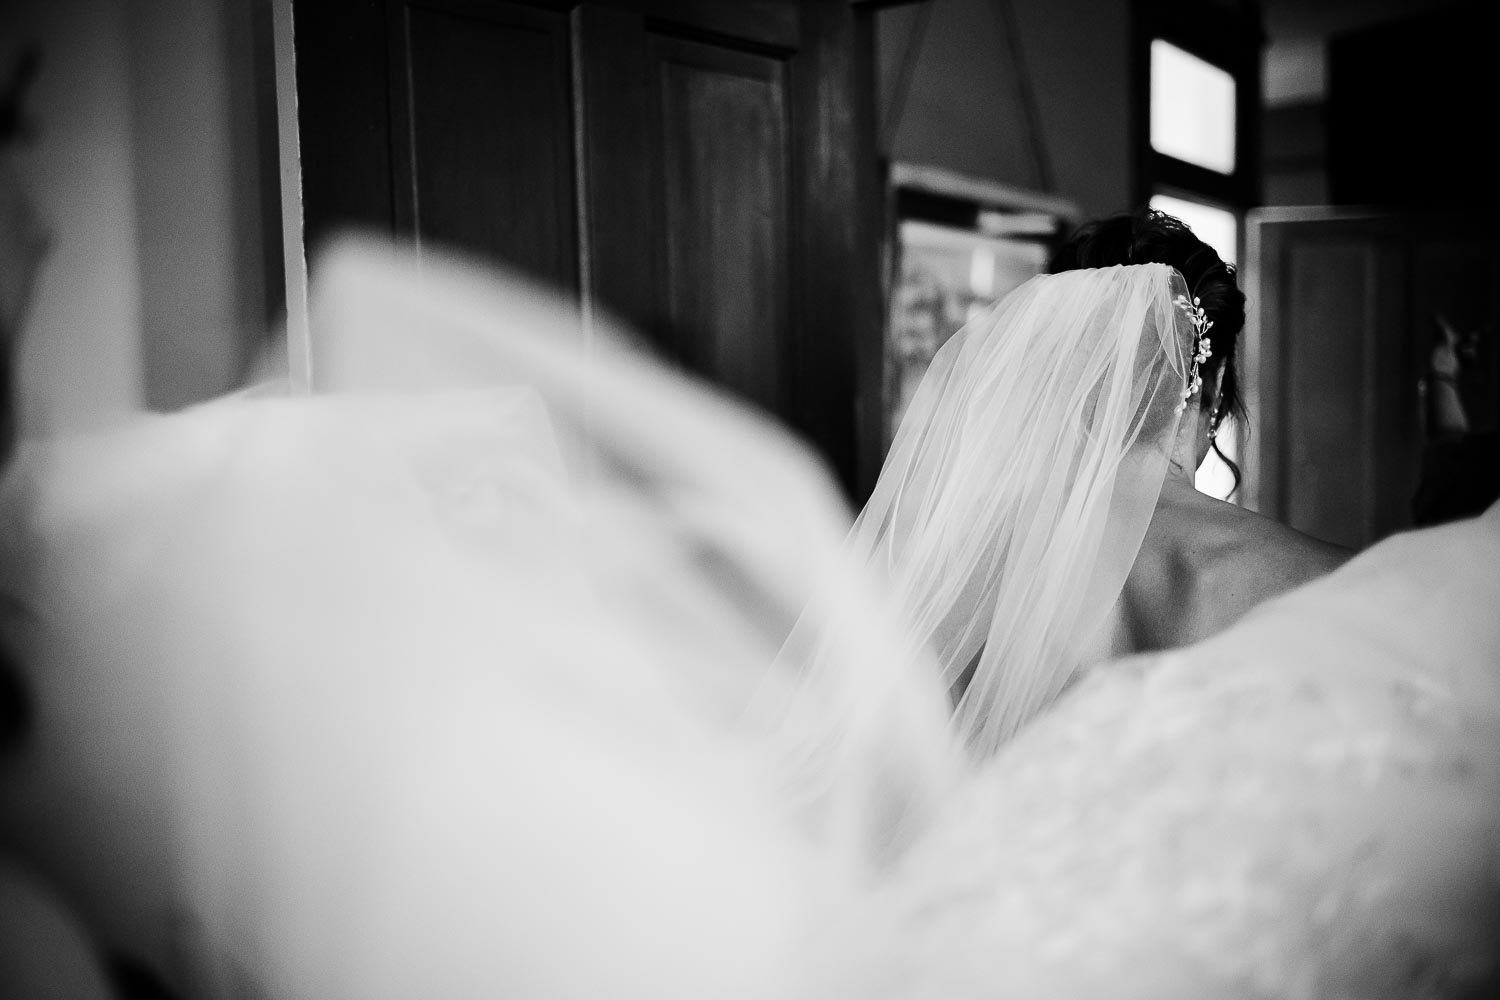 The bride walks through the door at Barr Mansion in Austin, Texas.